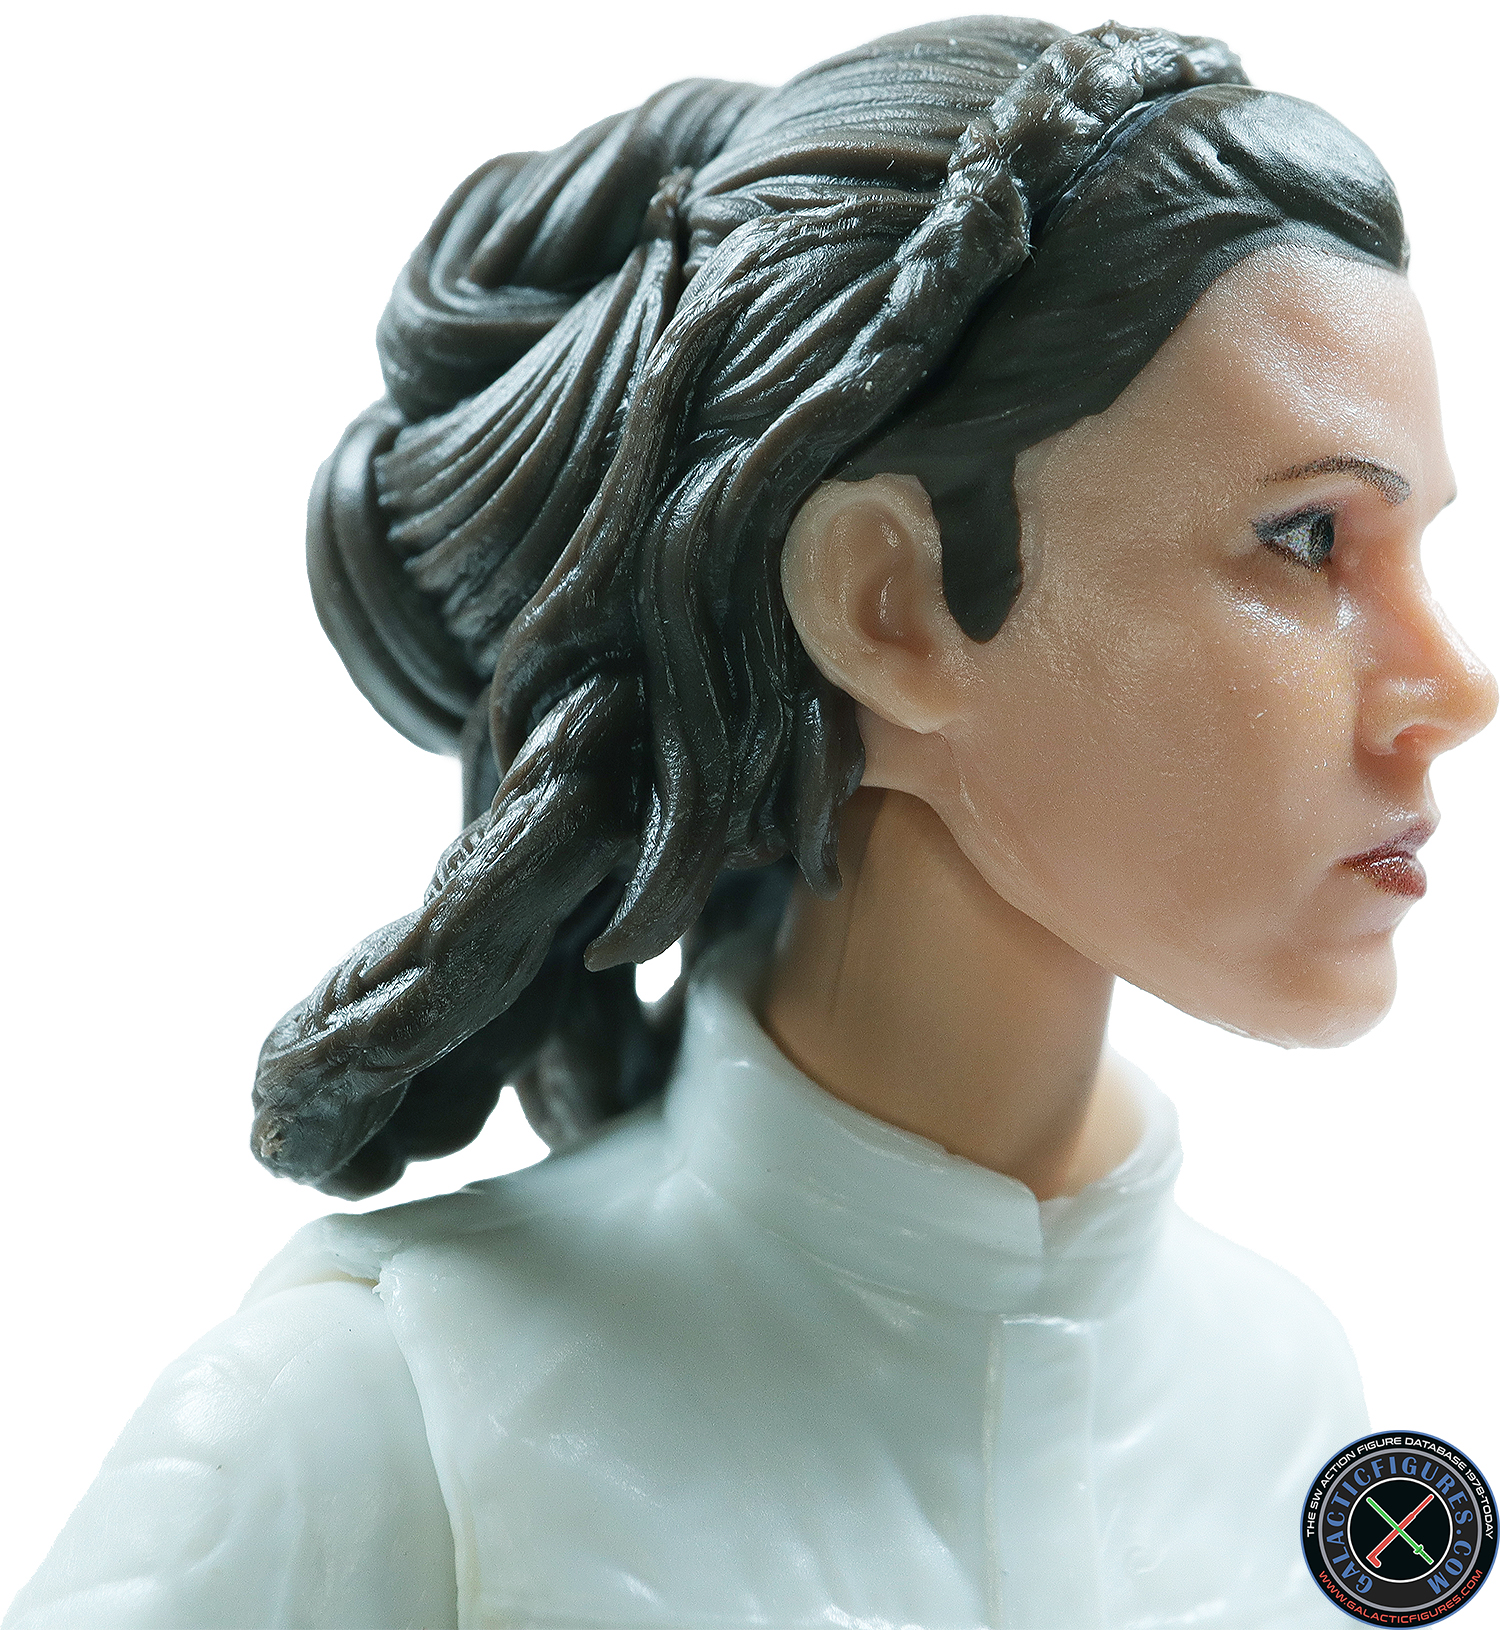 Princess Leia Organa Star Wars: Princess Leia